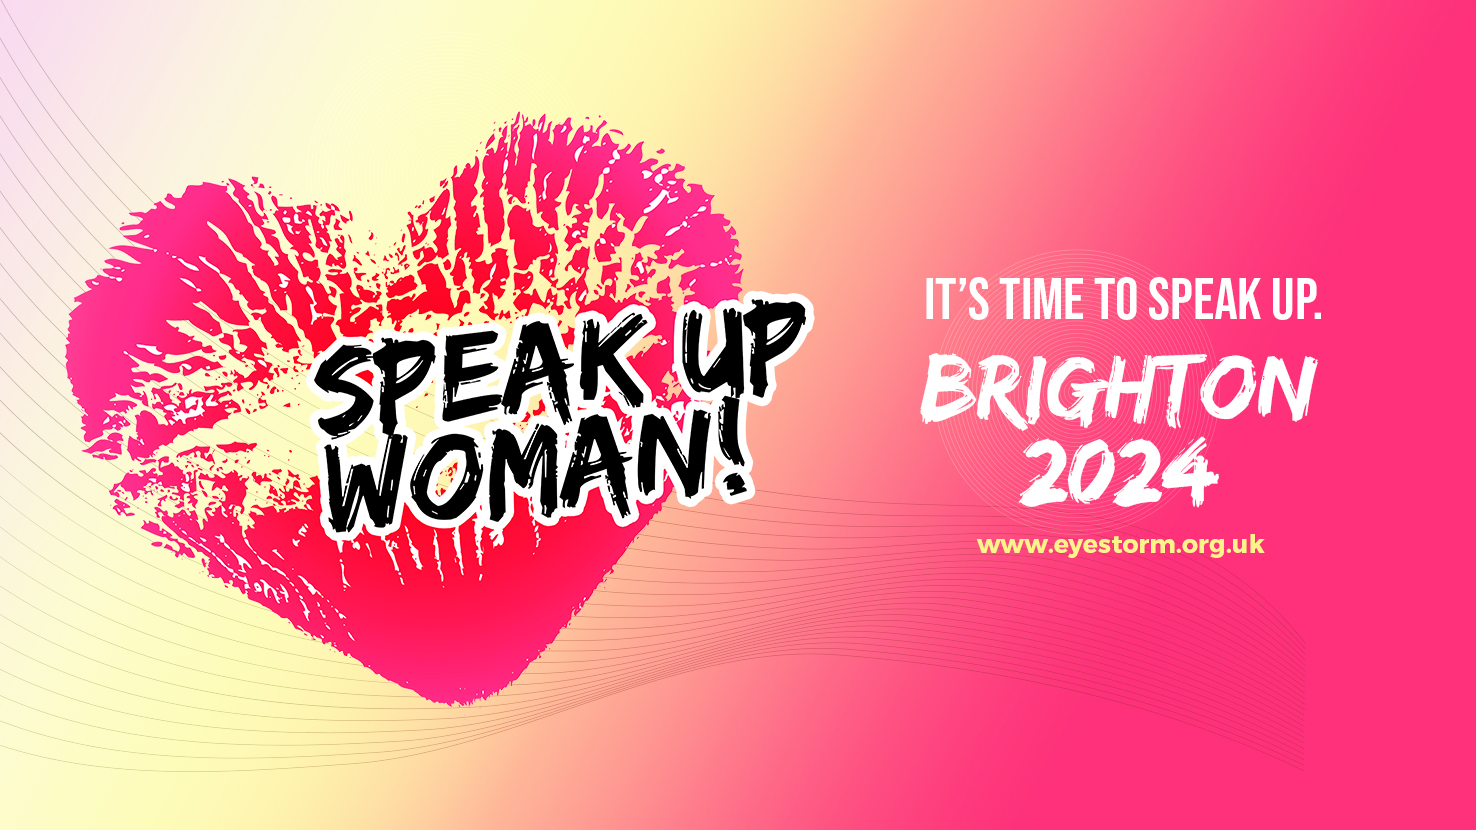 Speak Up Woman! Speaker event banner